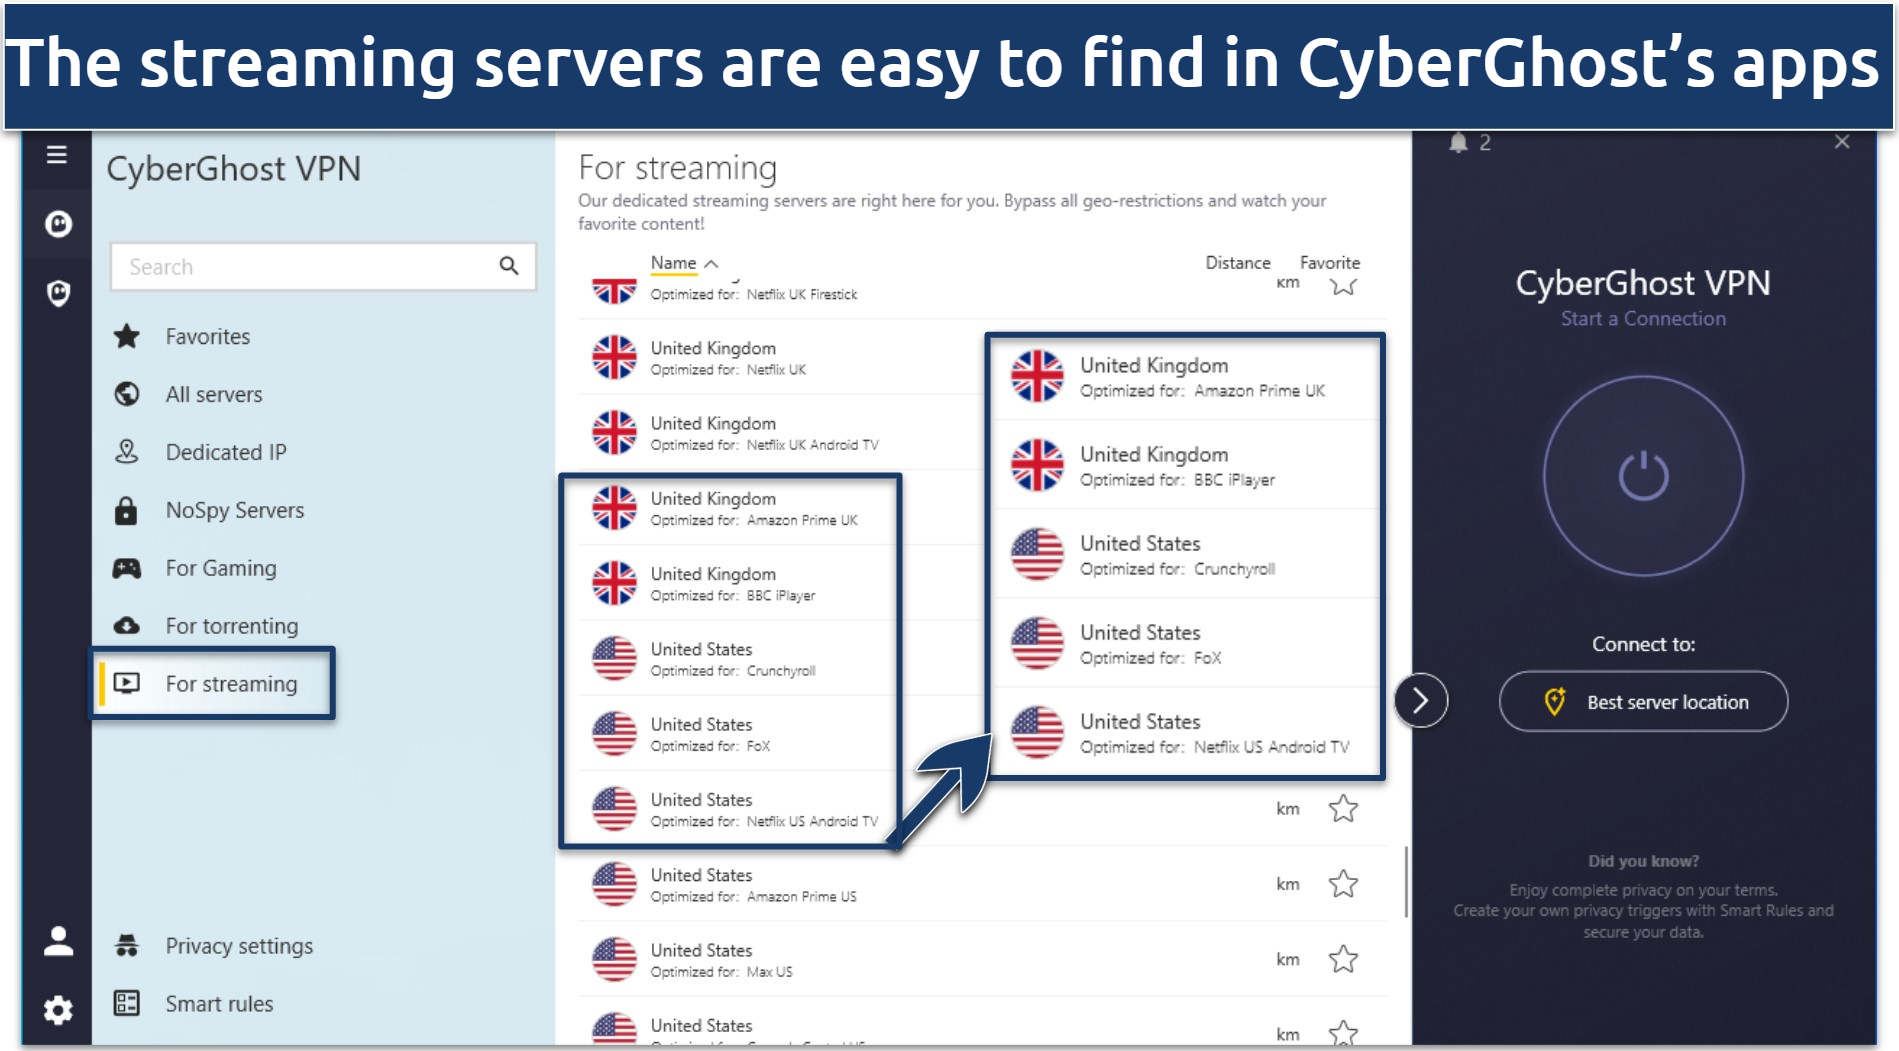 Screenshot of CyberGhost's Windows app showing dedicated streaming servers